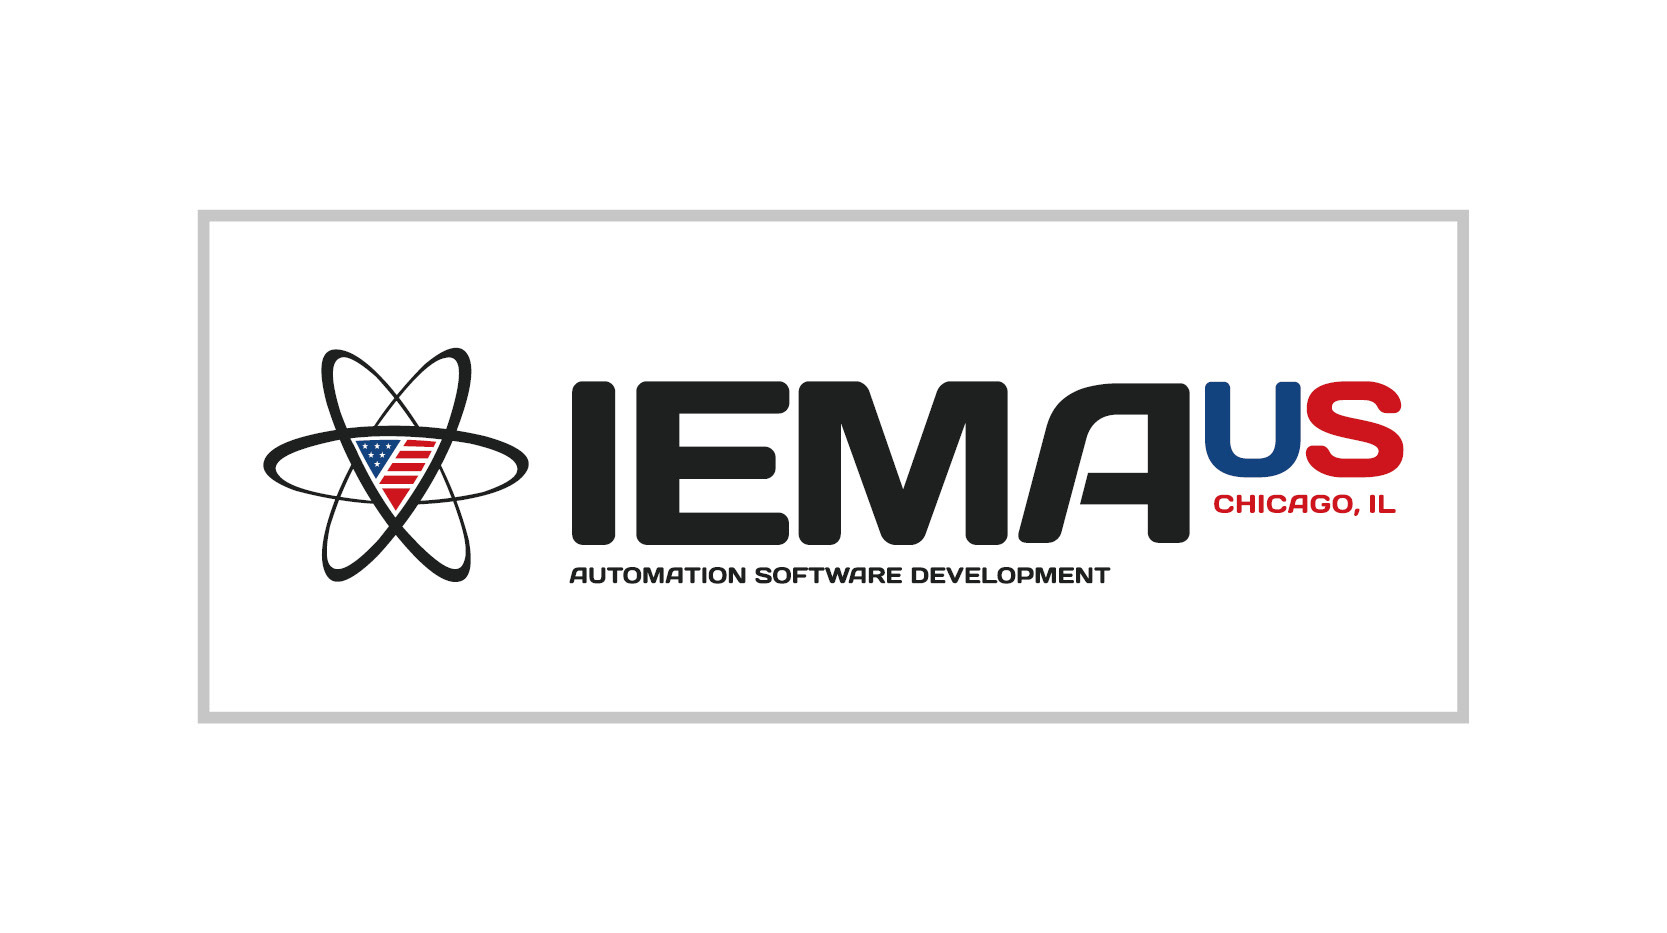 IEMA-US-logo